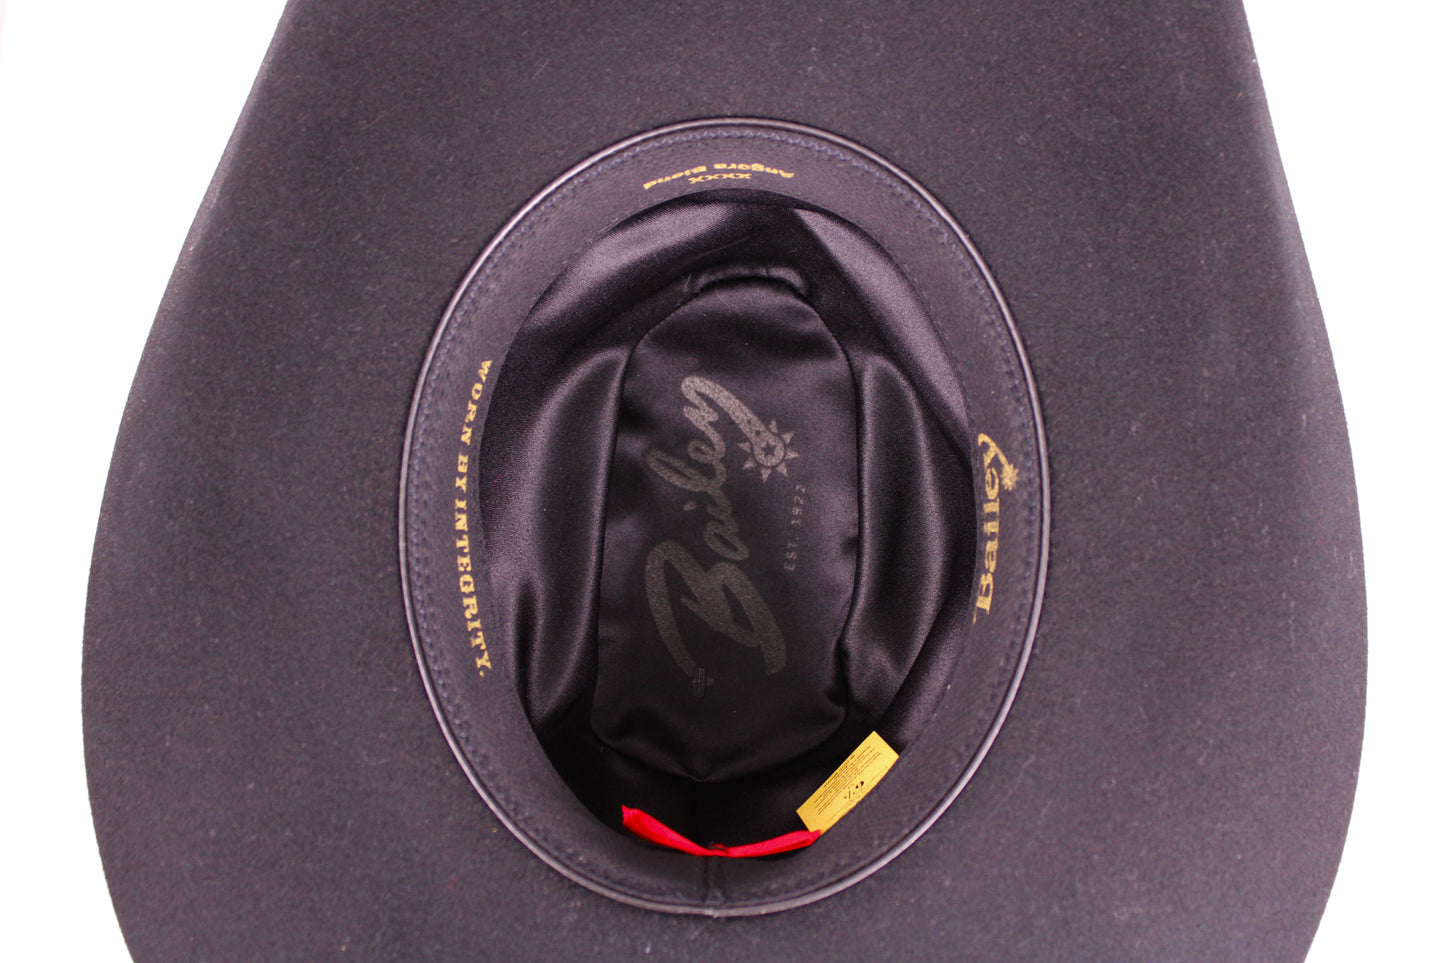 4x Bailey Hastings Black Felt Hat